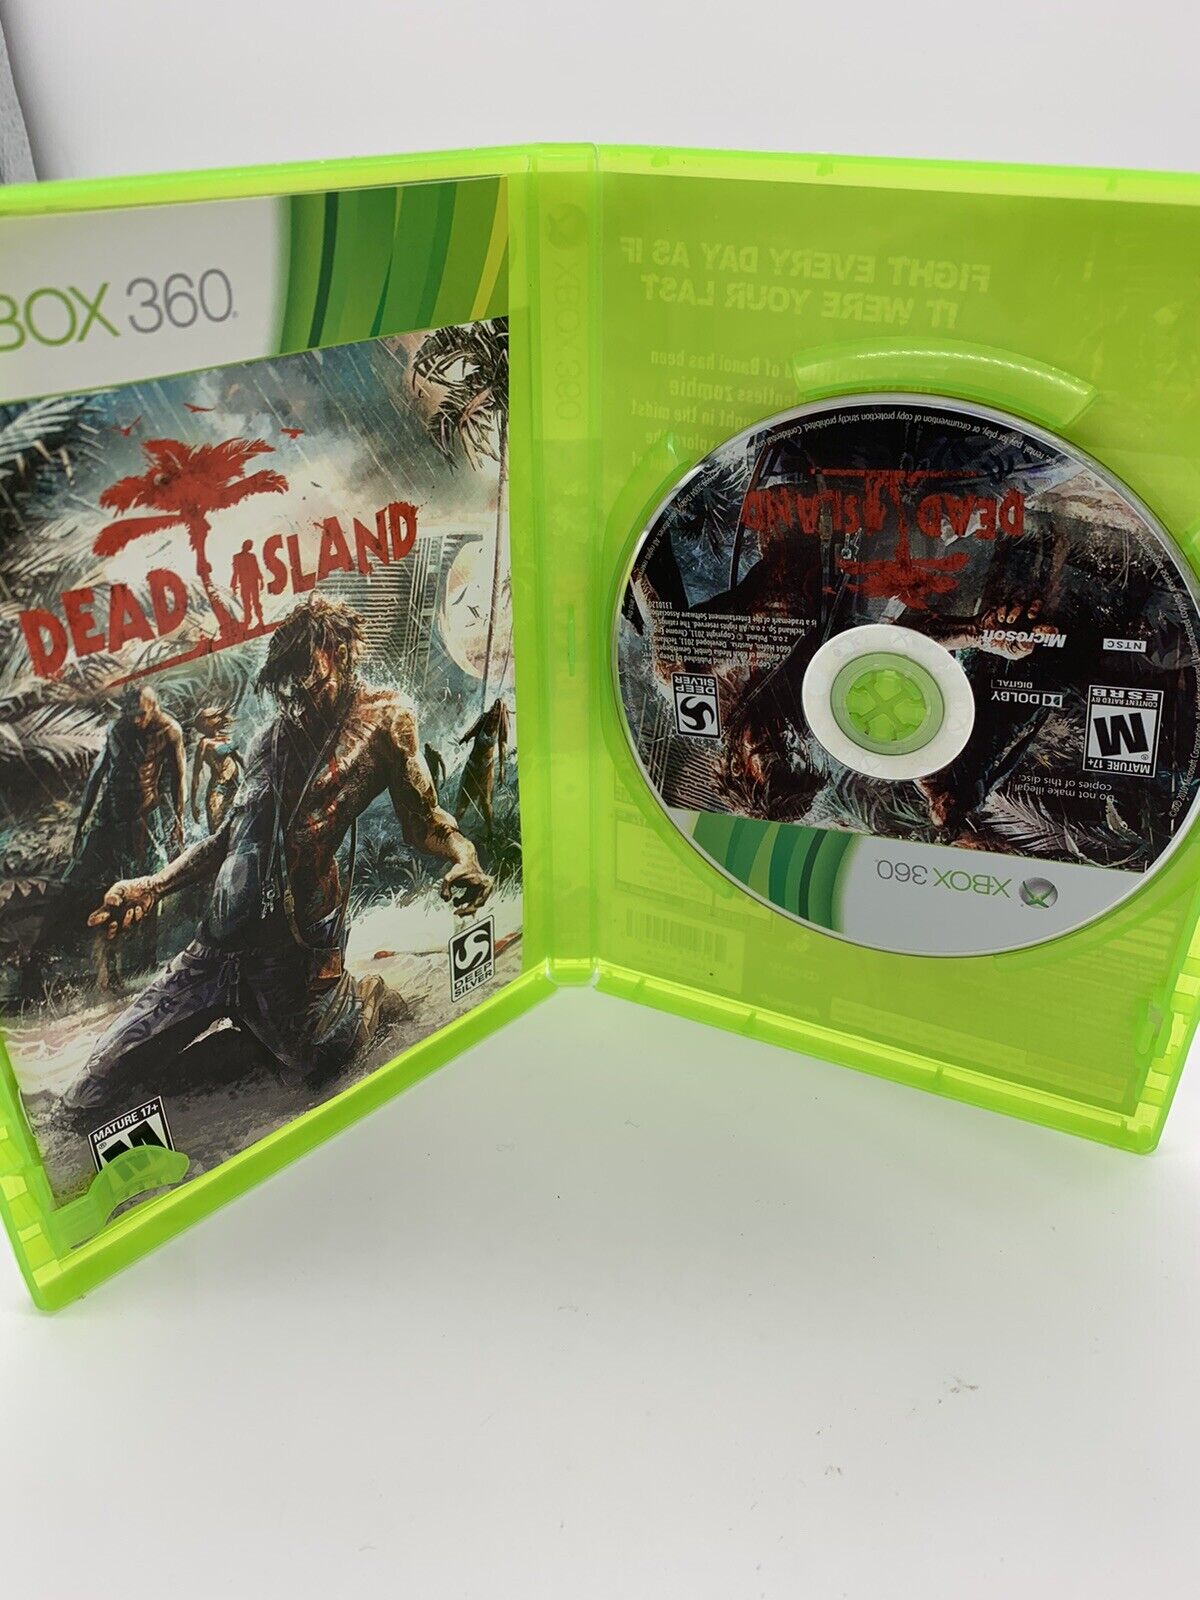 Dead Island (Microsoft Xbox 360, 2011)